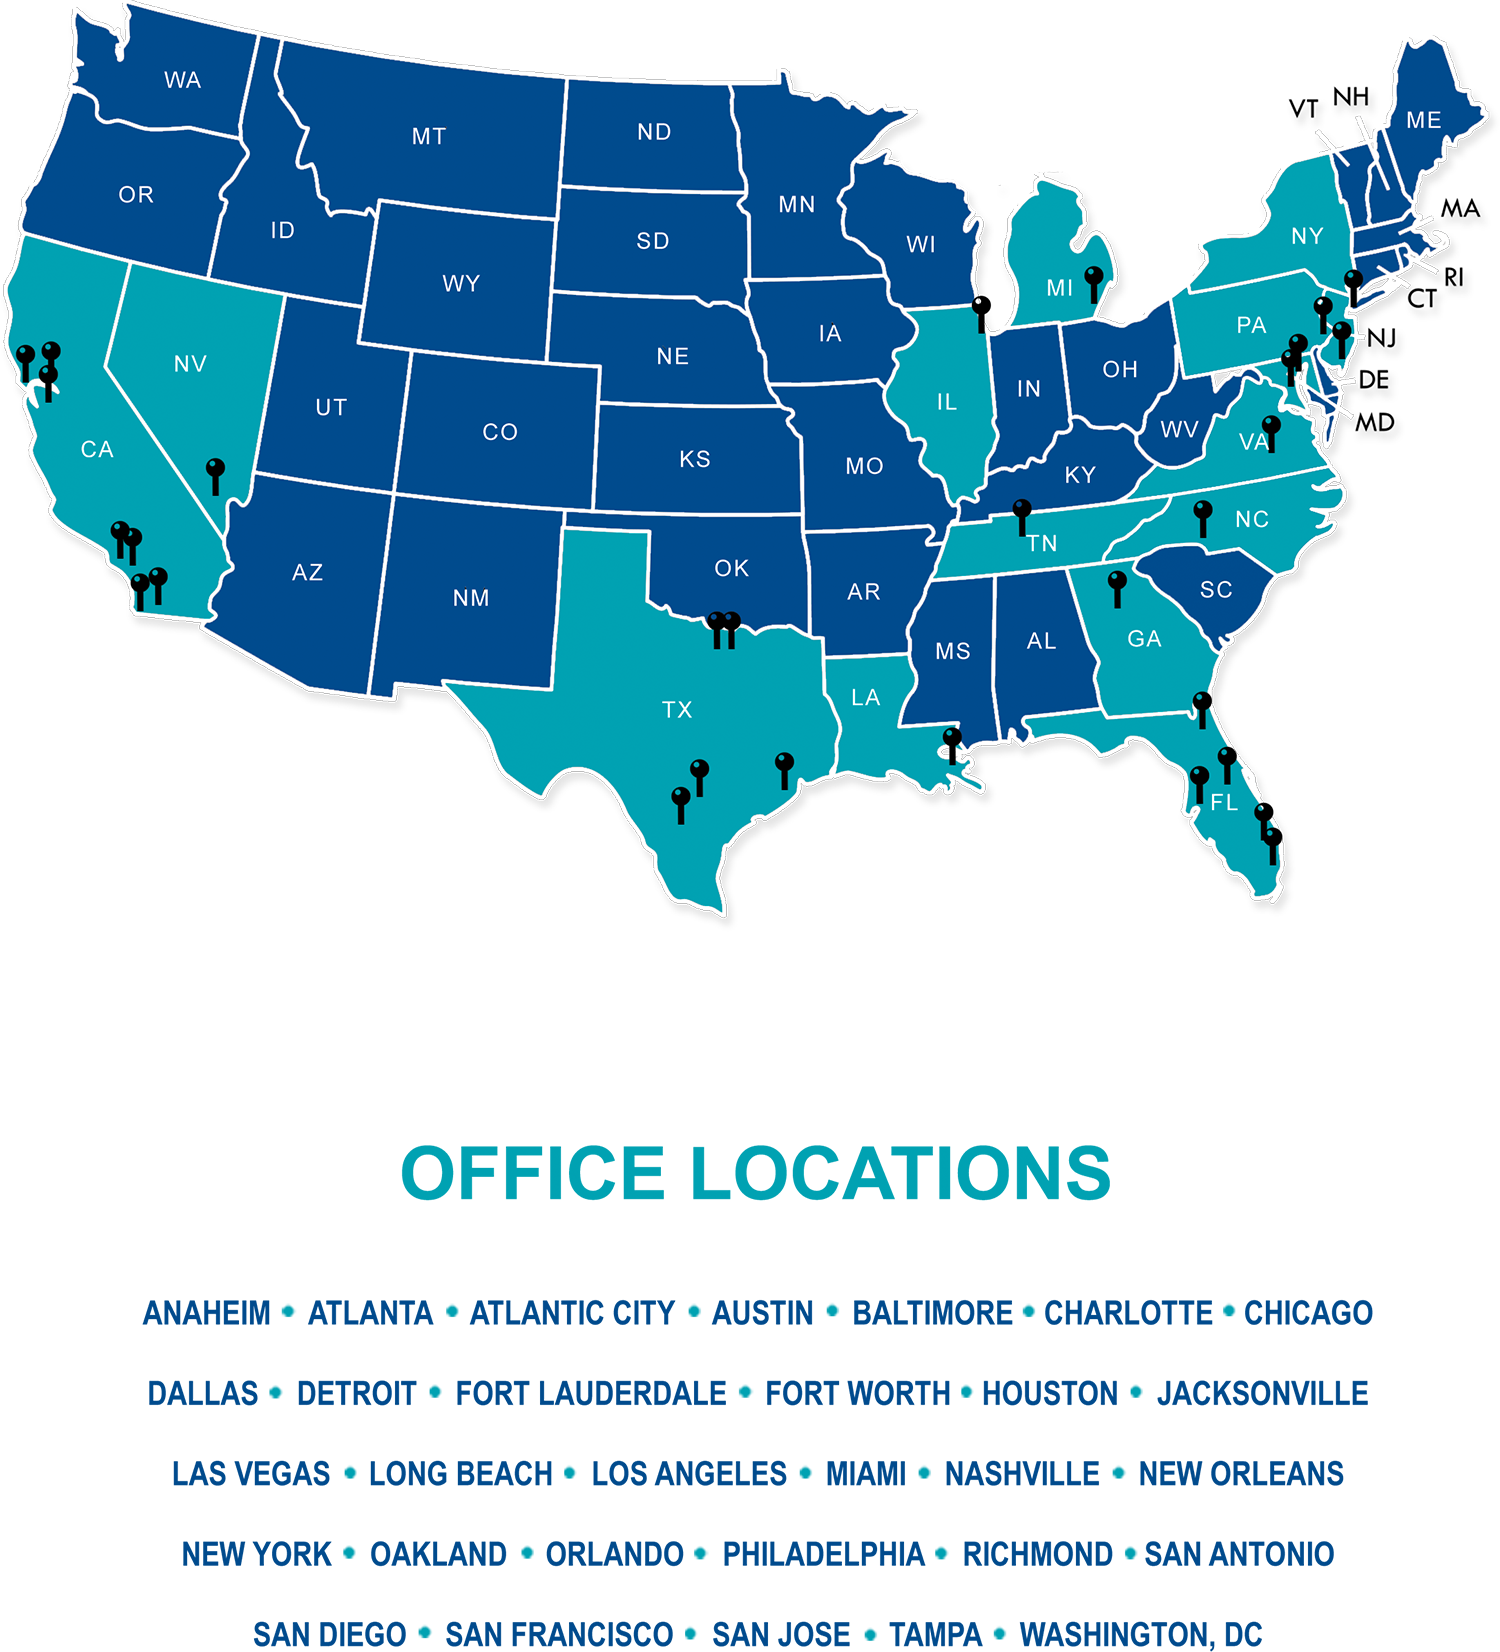 CSI Office Location Map